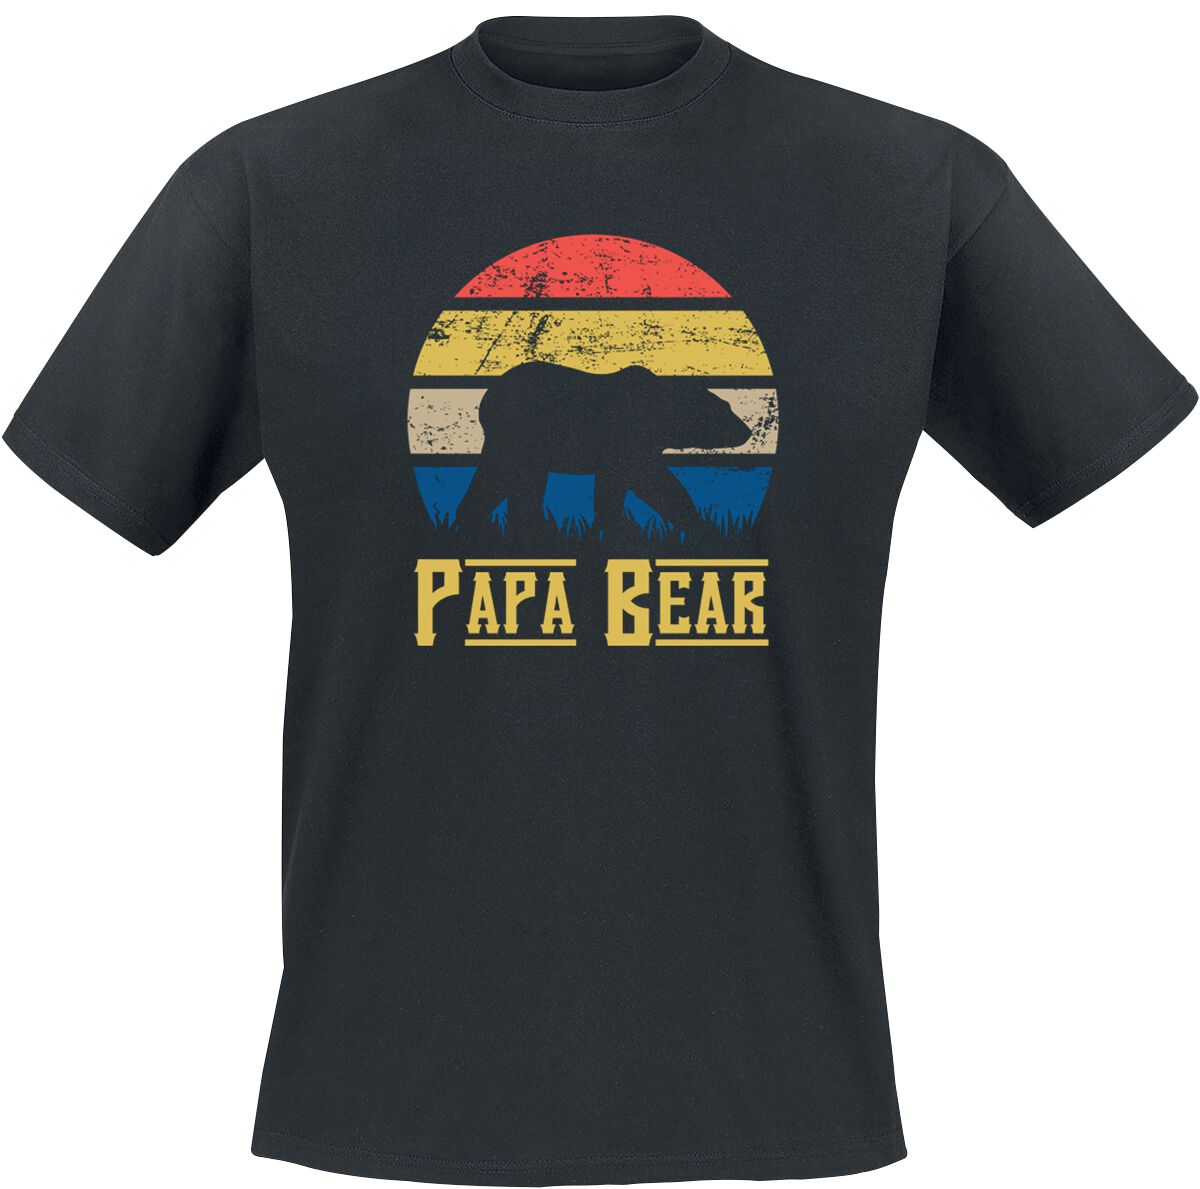 Familie & Freunde Papa Bear T-Shirt schwarz in 5XL